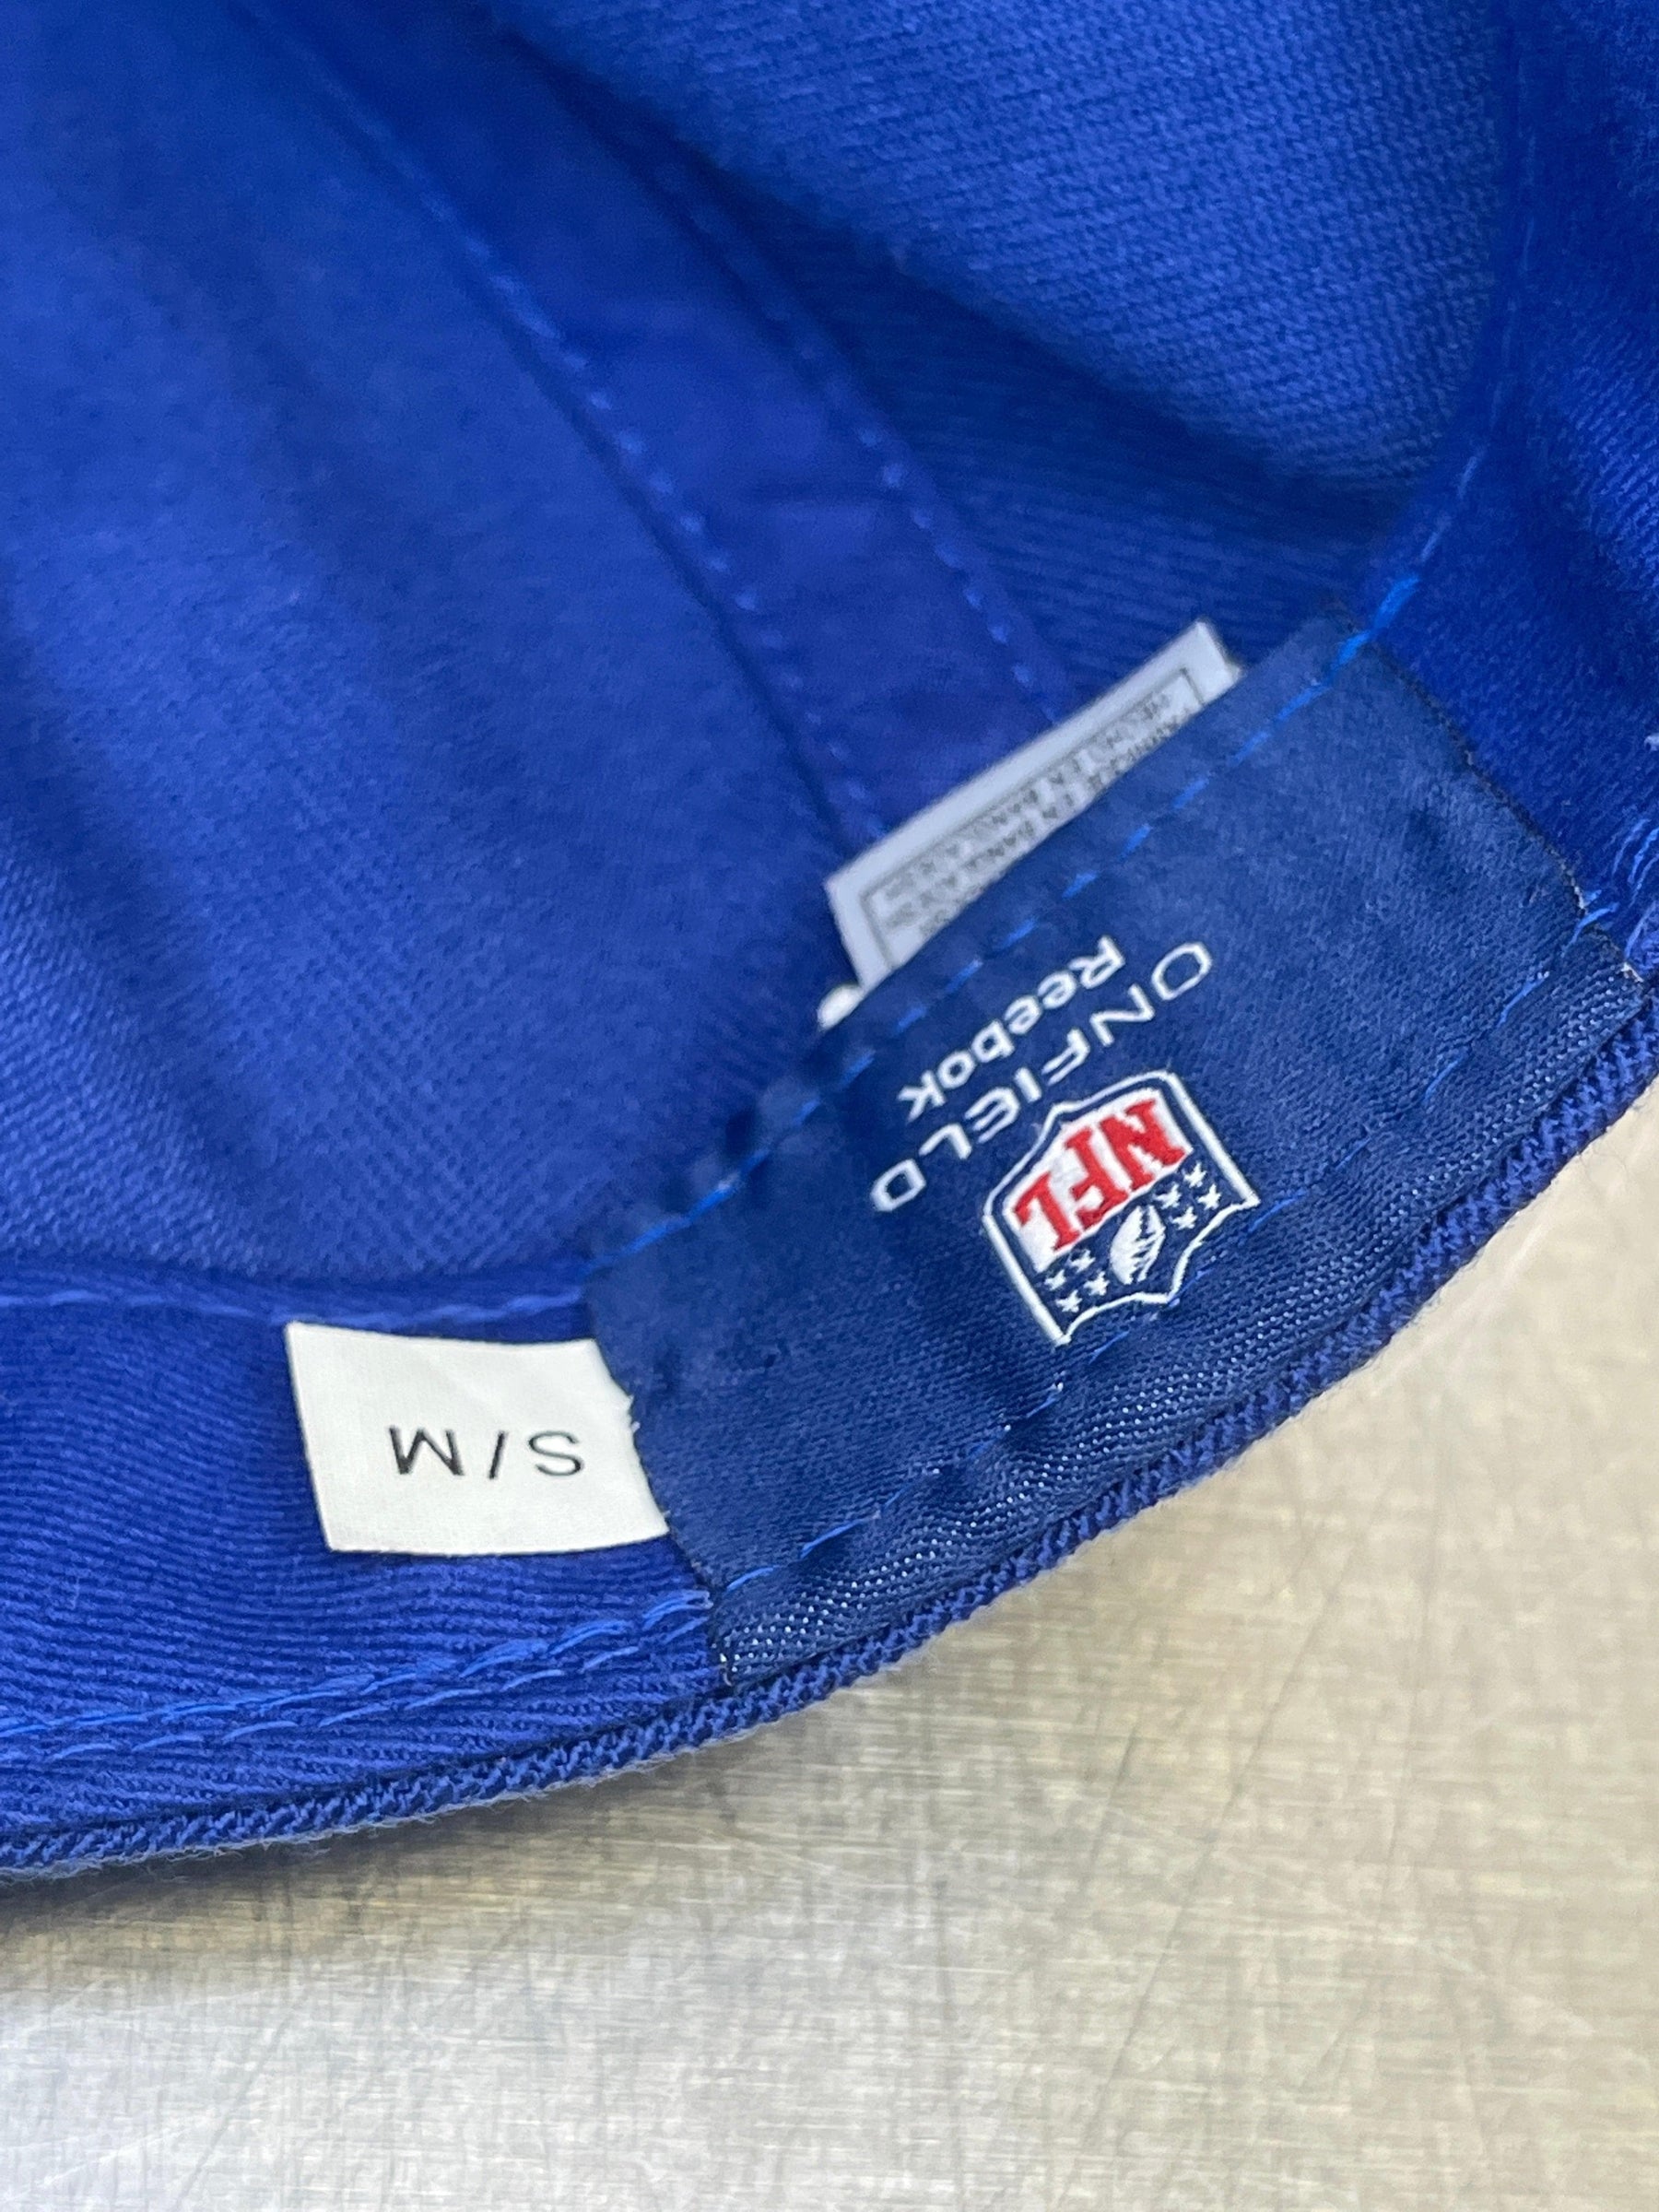 NFL New York Giants Reebok Hat/Cap Wool Blend Size Small/Medium